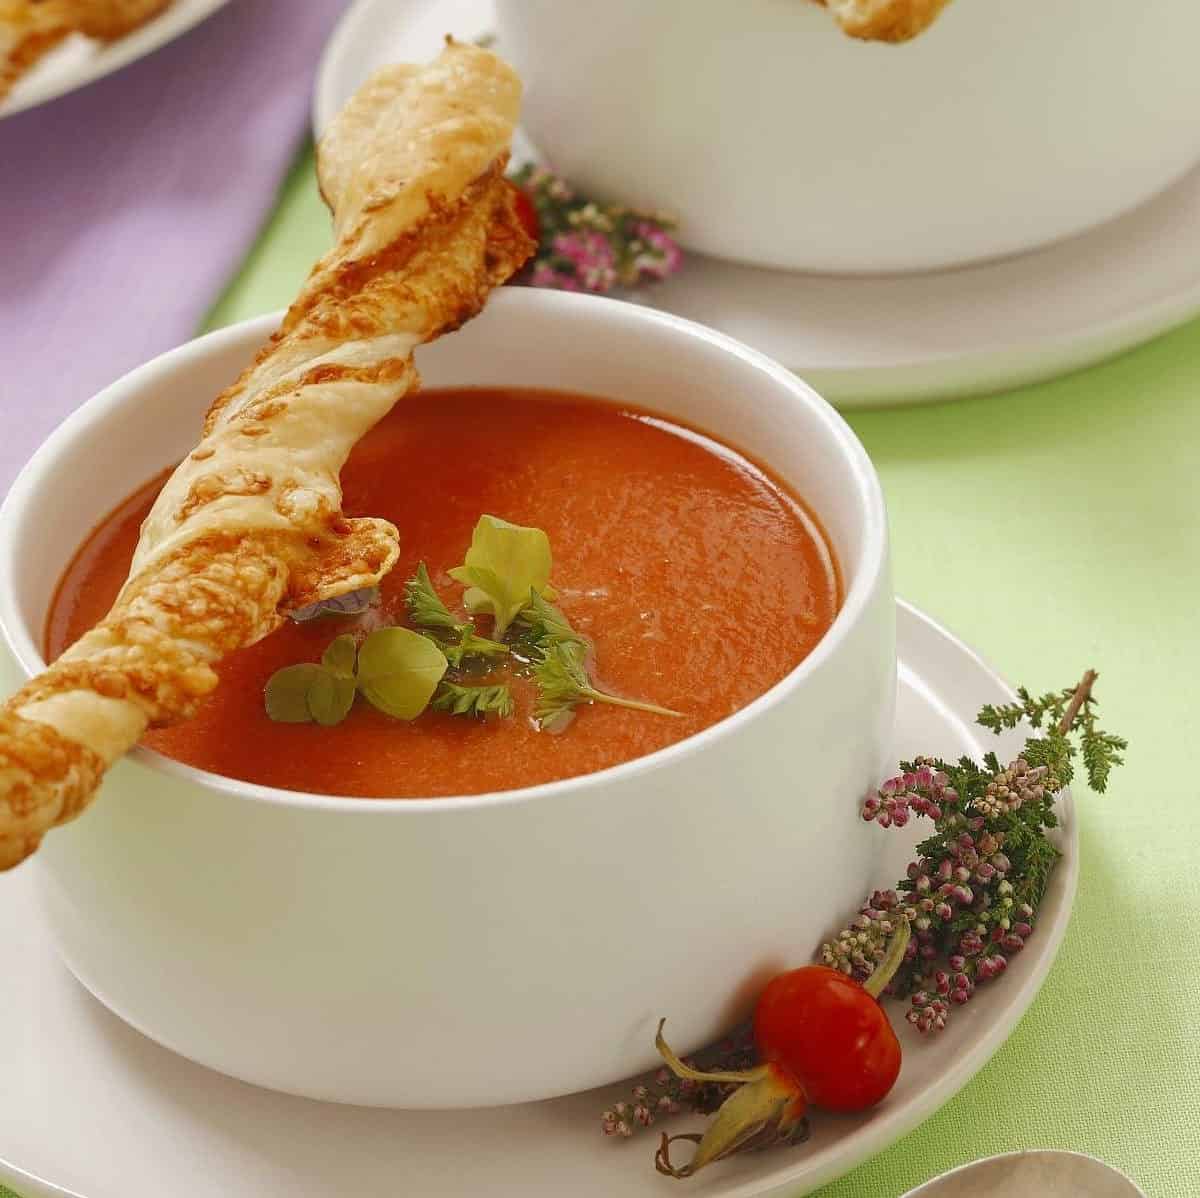  Cream of tomato soup never looked so elegant